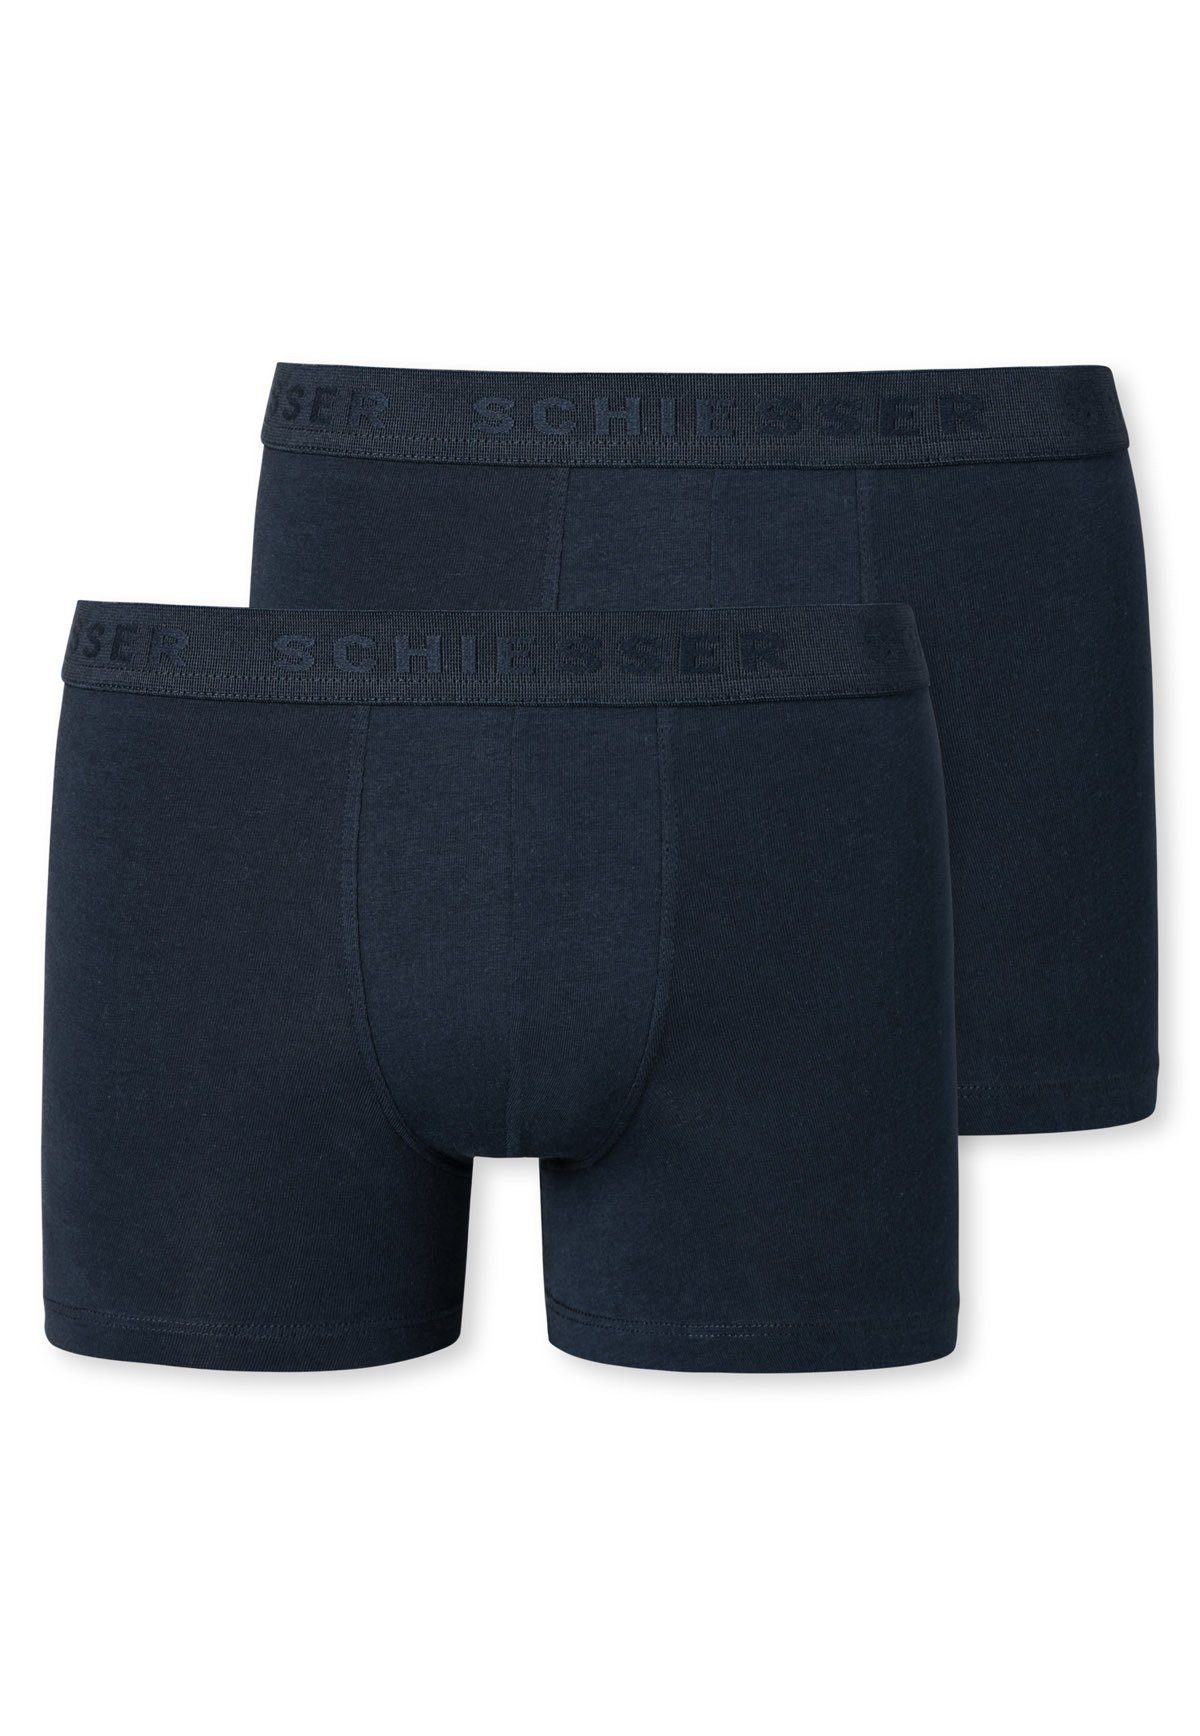 Dunkelblau - Jungen Serie Shorts einfarbig Boxer Schiesser 95/5, 2er Pack